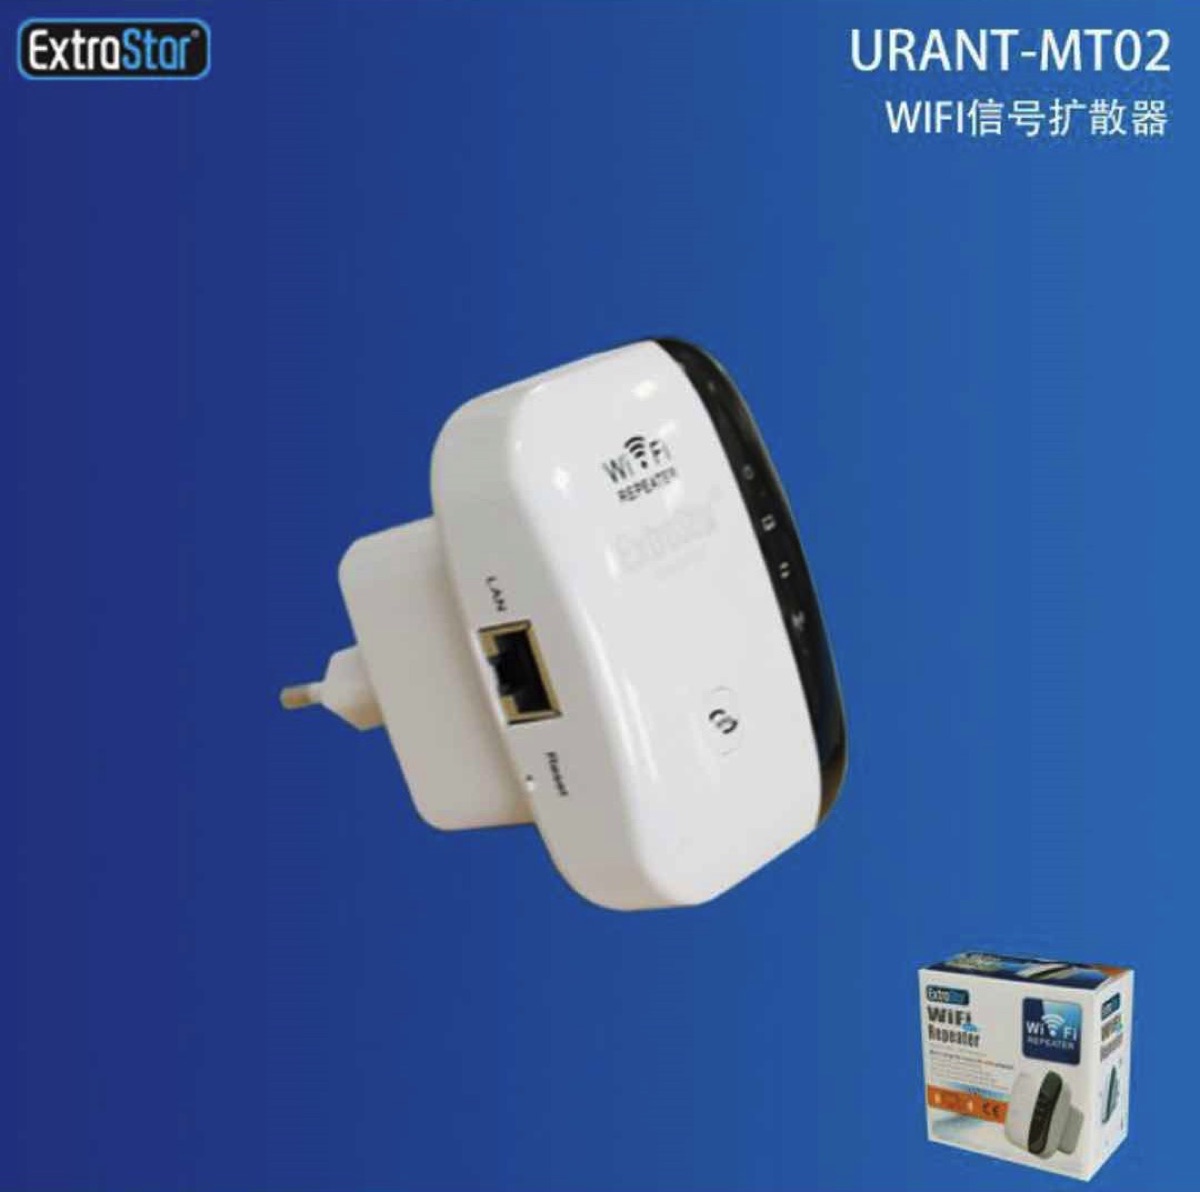 EXTRASTAR URANT-MT02 Wifi Repeater White